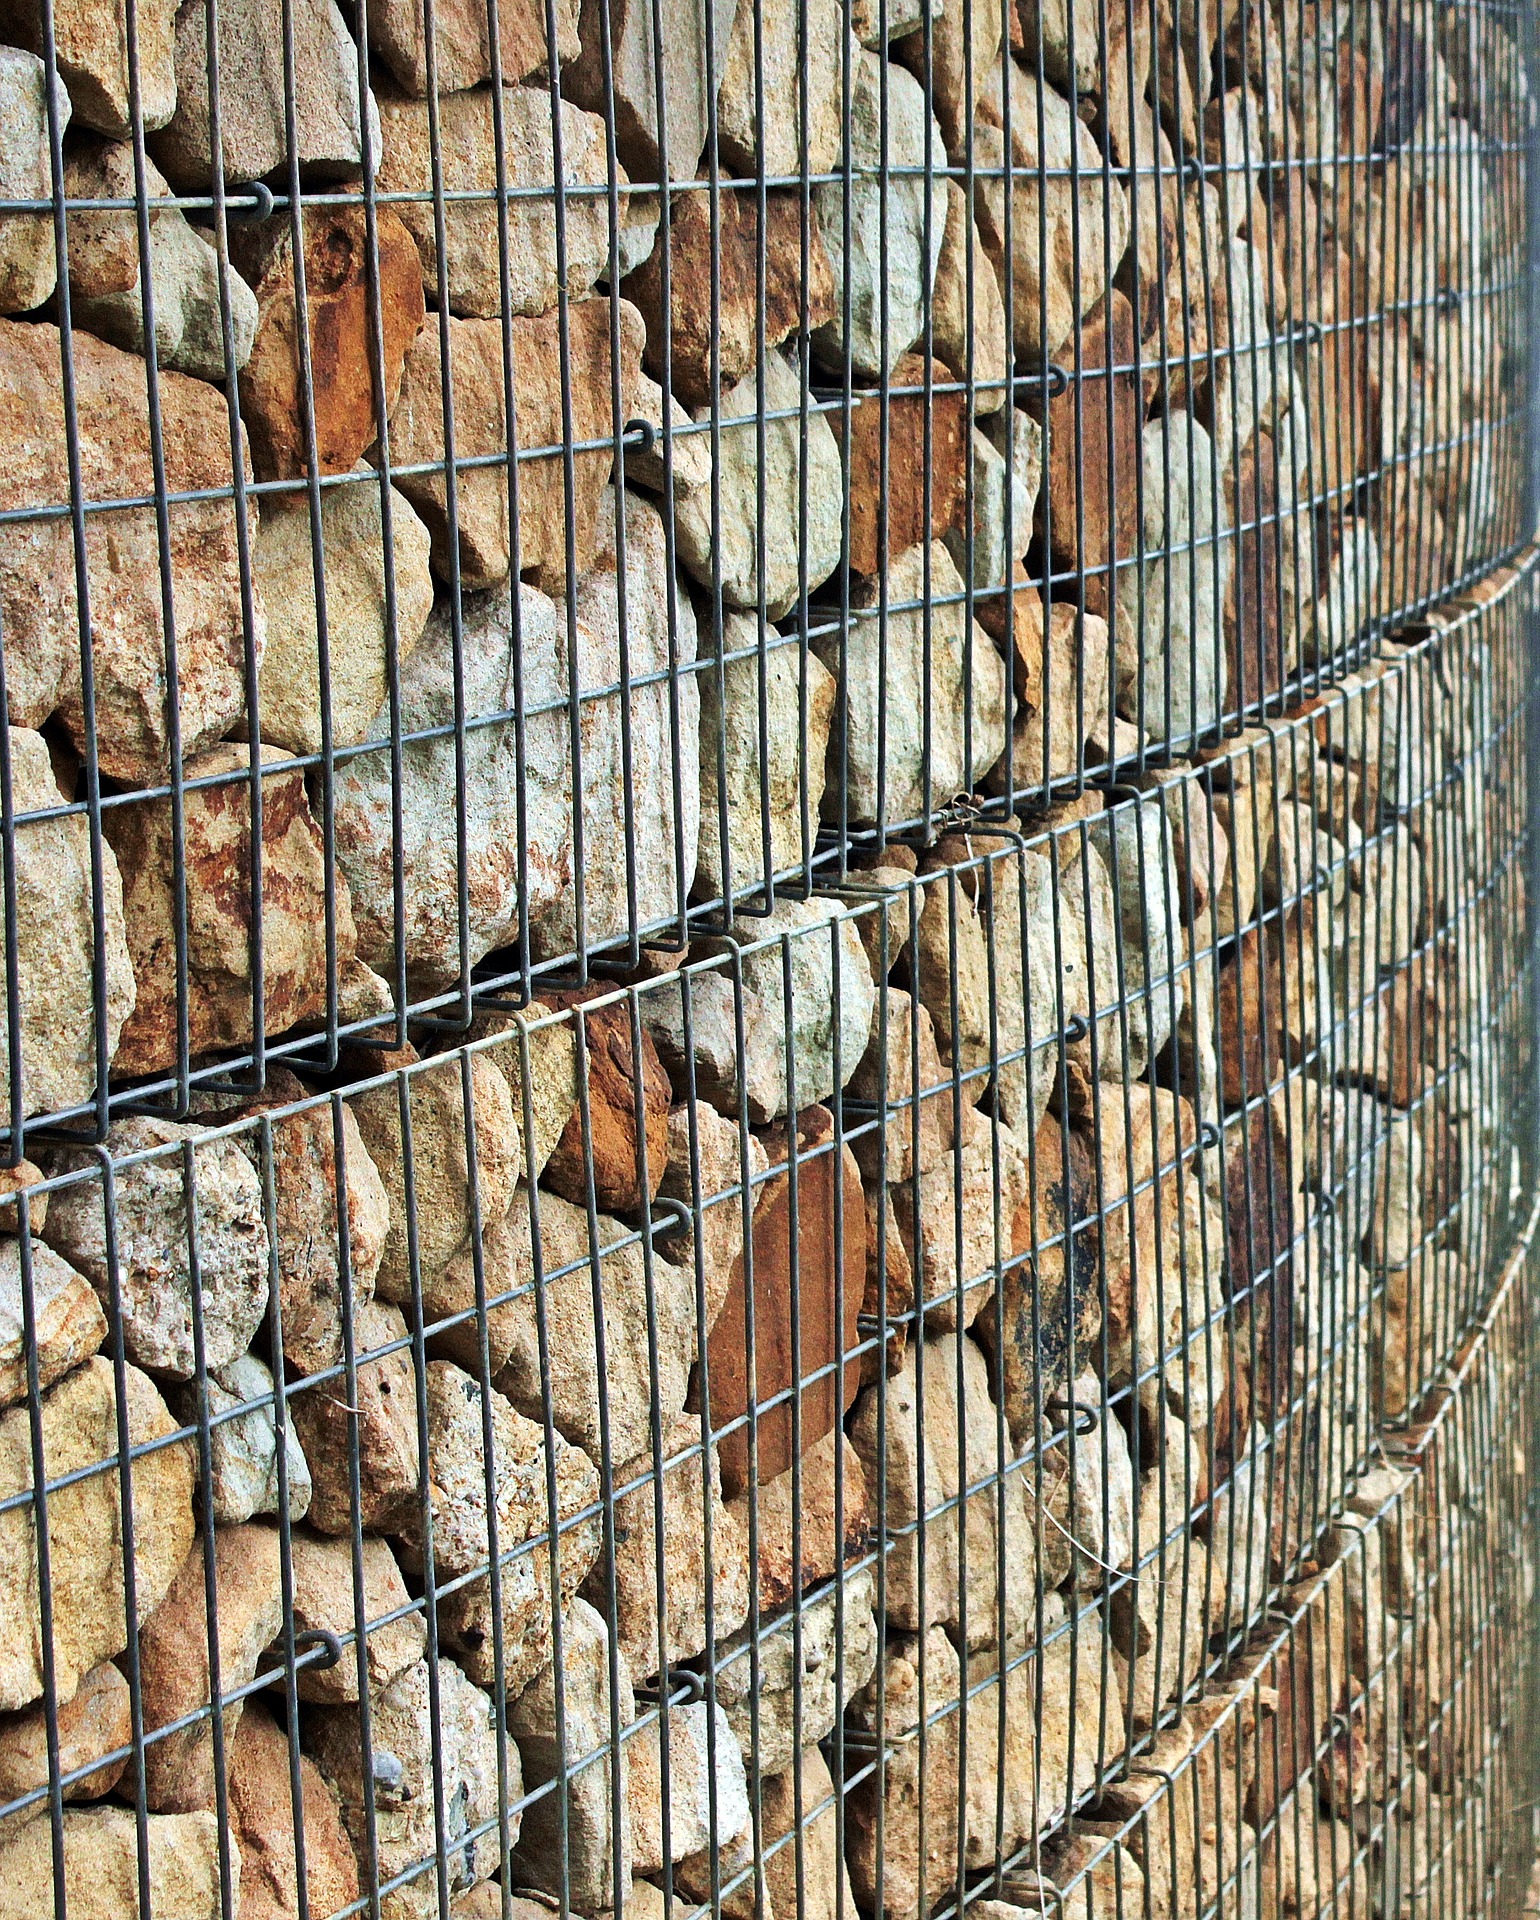 Stones Inside Fence